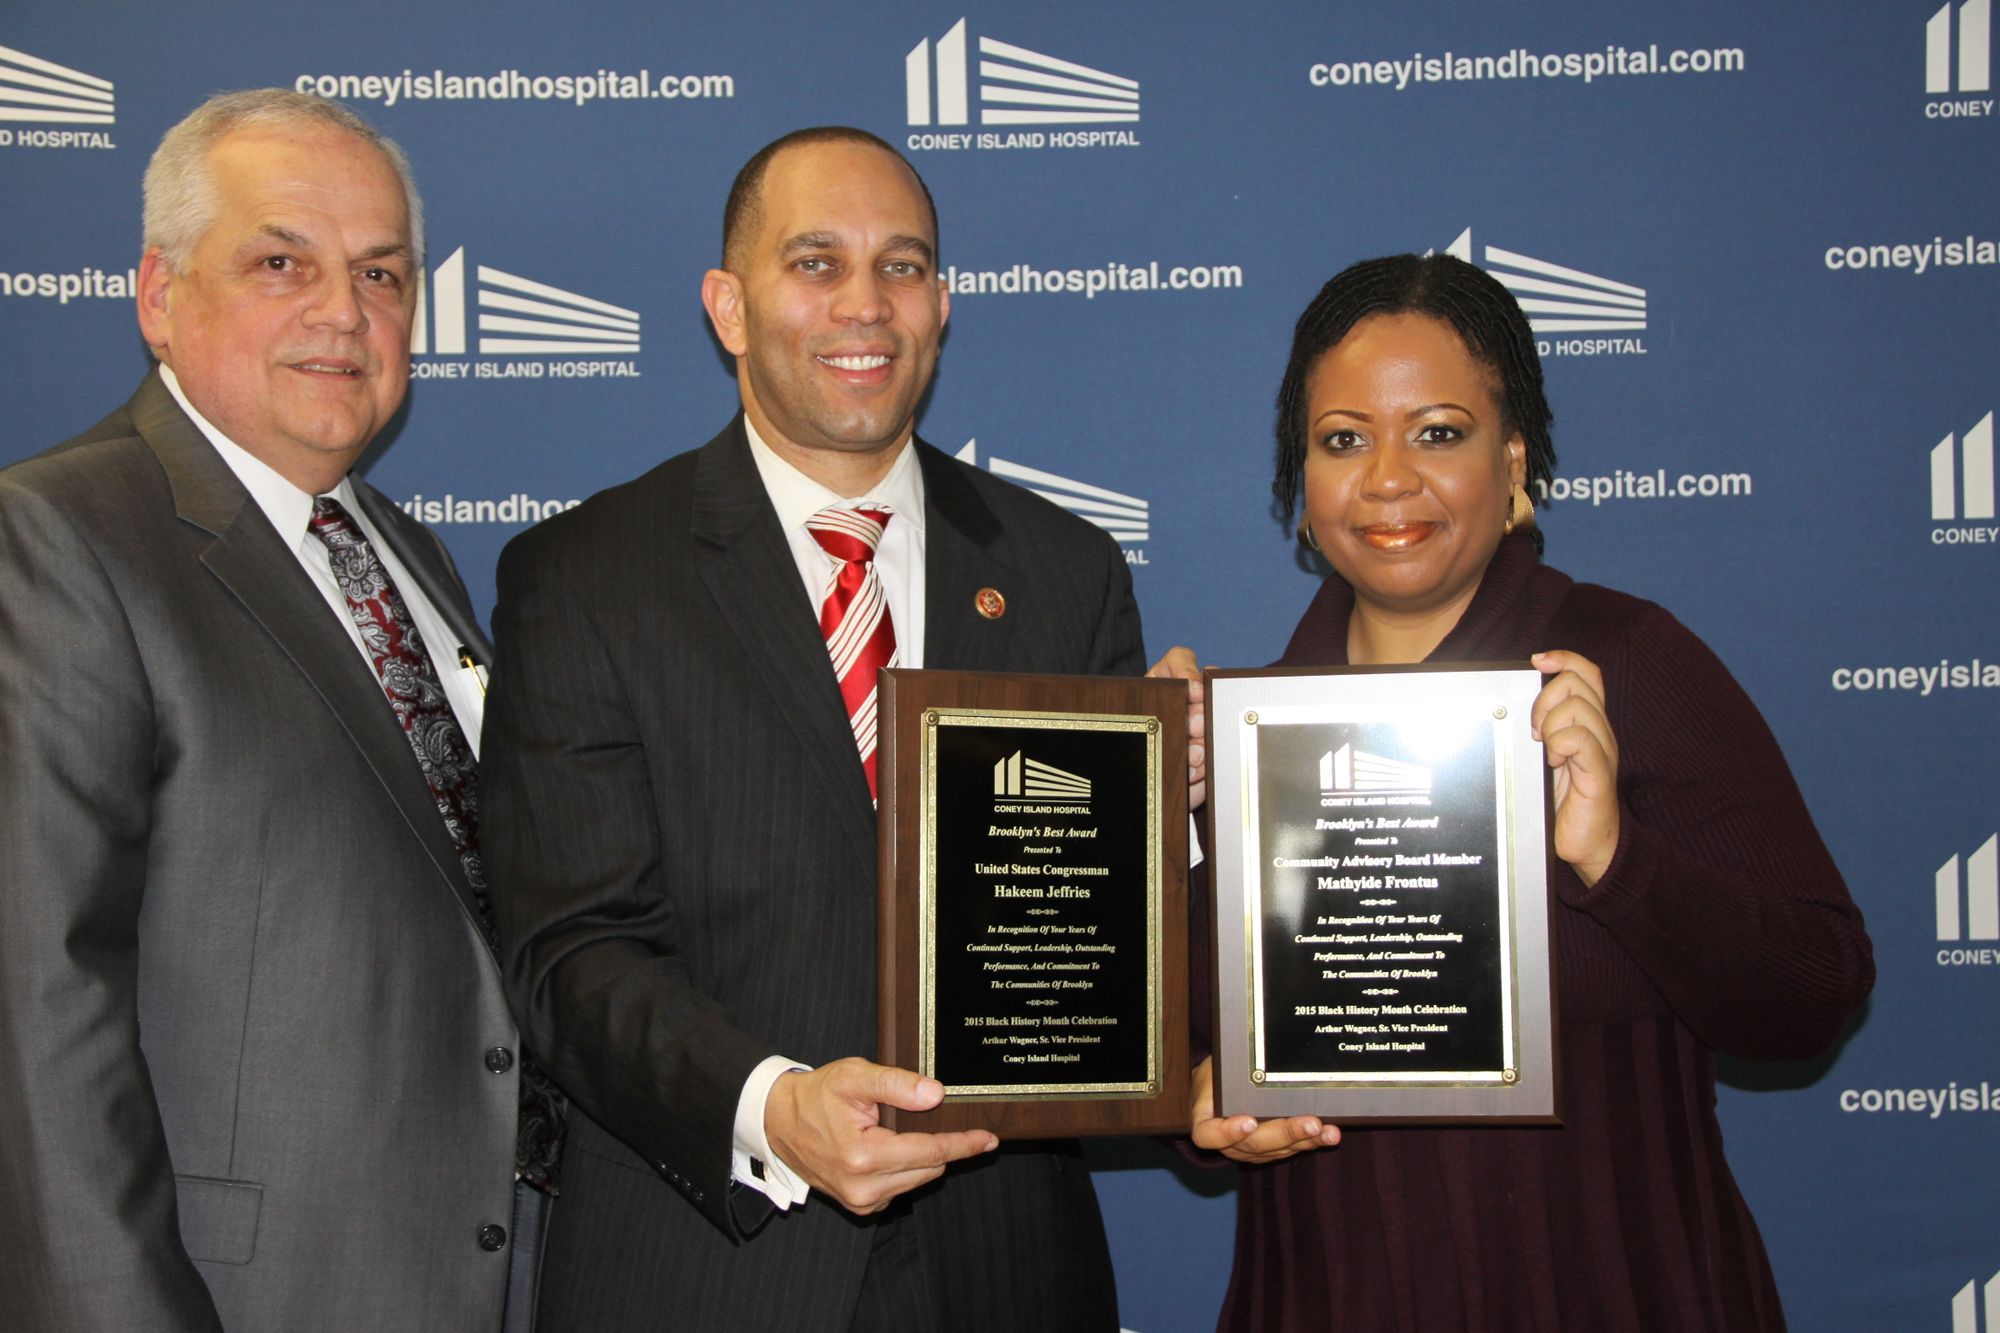 Congressman Hakeem Jeffries & Mathylde Frontus Honored For Efforts To Revitalize Coney Island